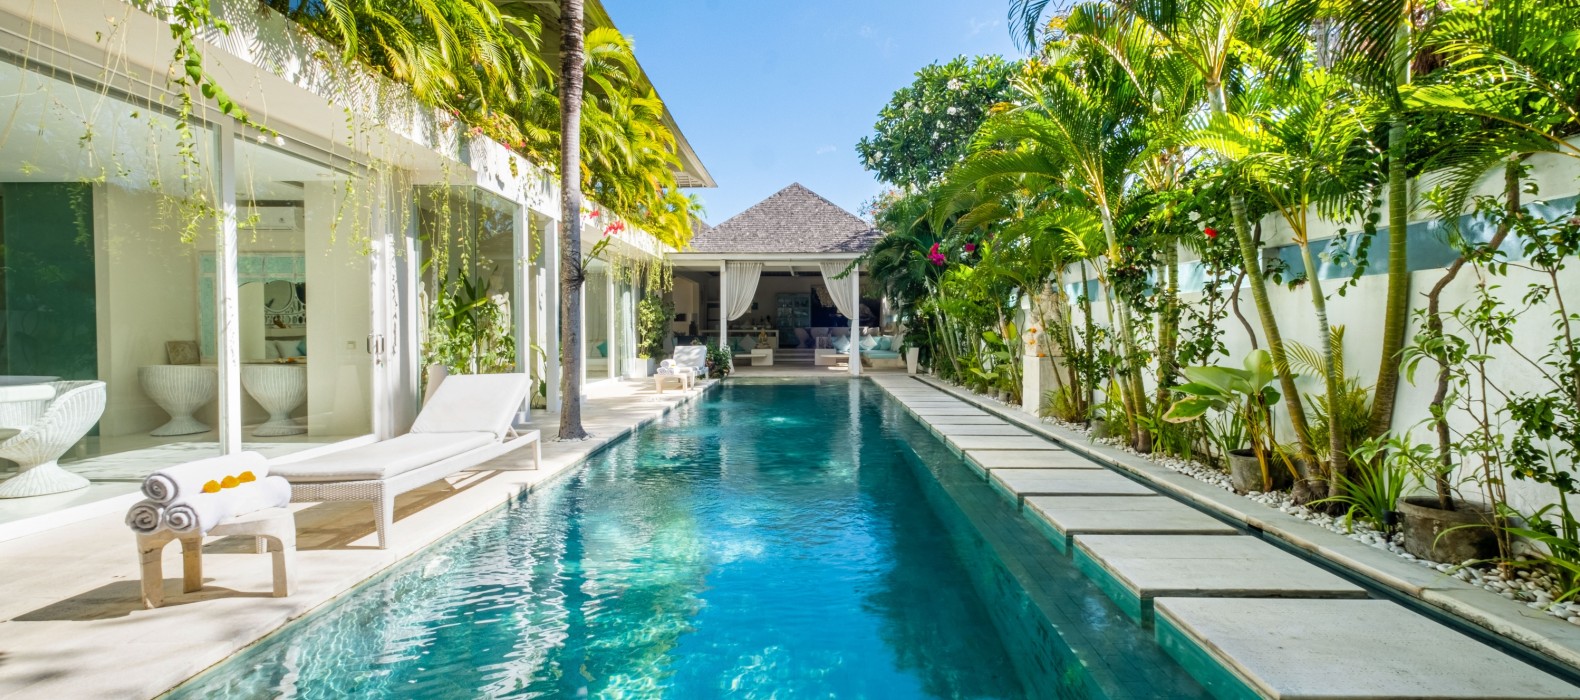 Exterior pool view of Villa Serentiy in Bali